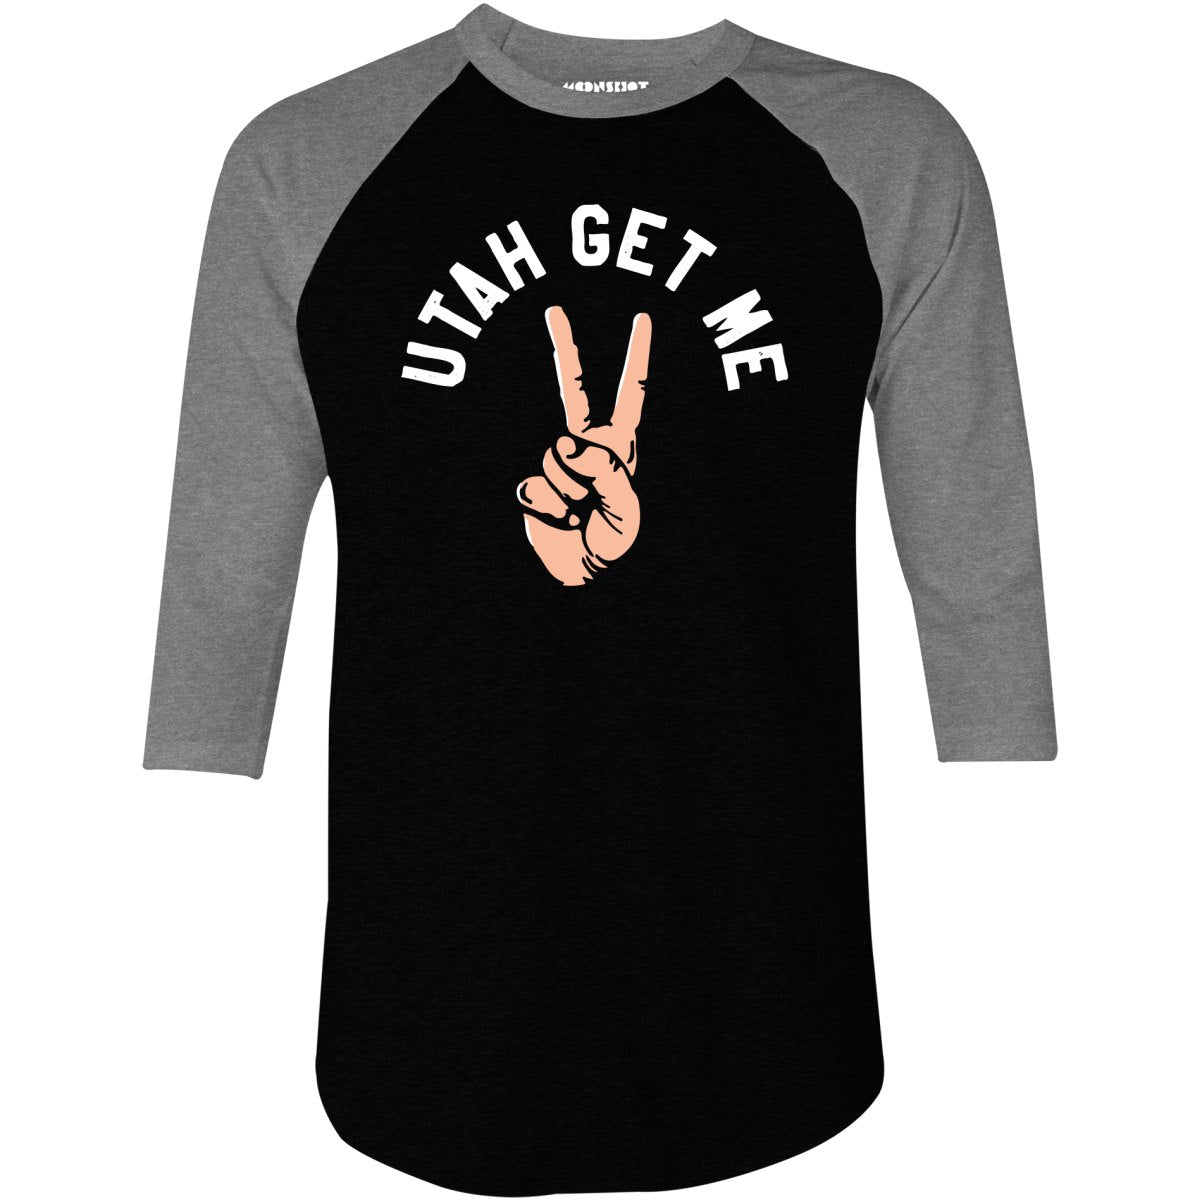 Utah Get Me Two - 3/4 Sleeve Raglan T-Shirt